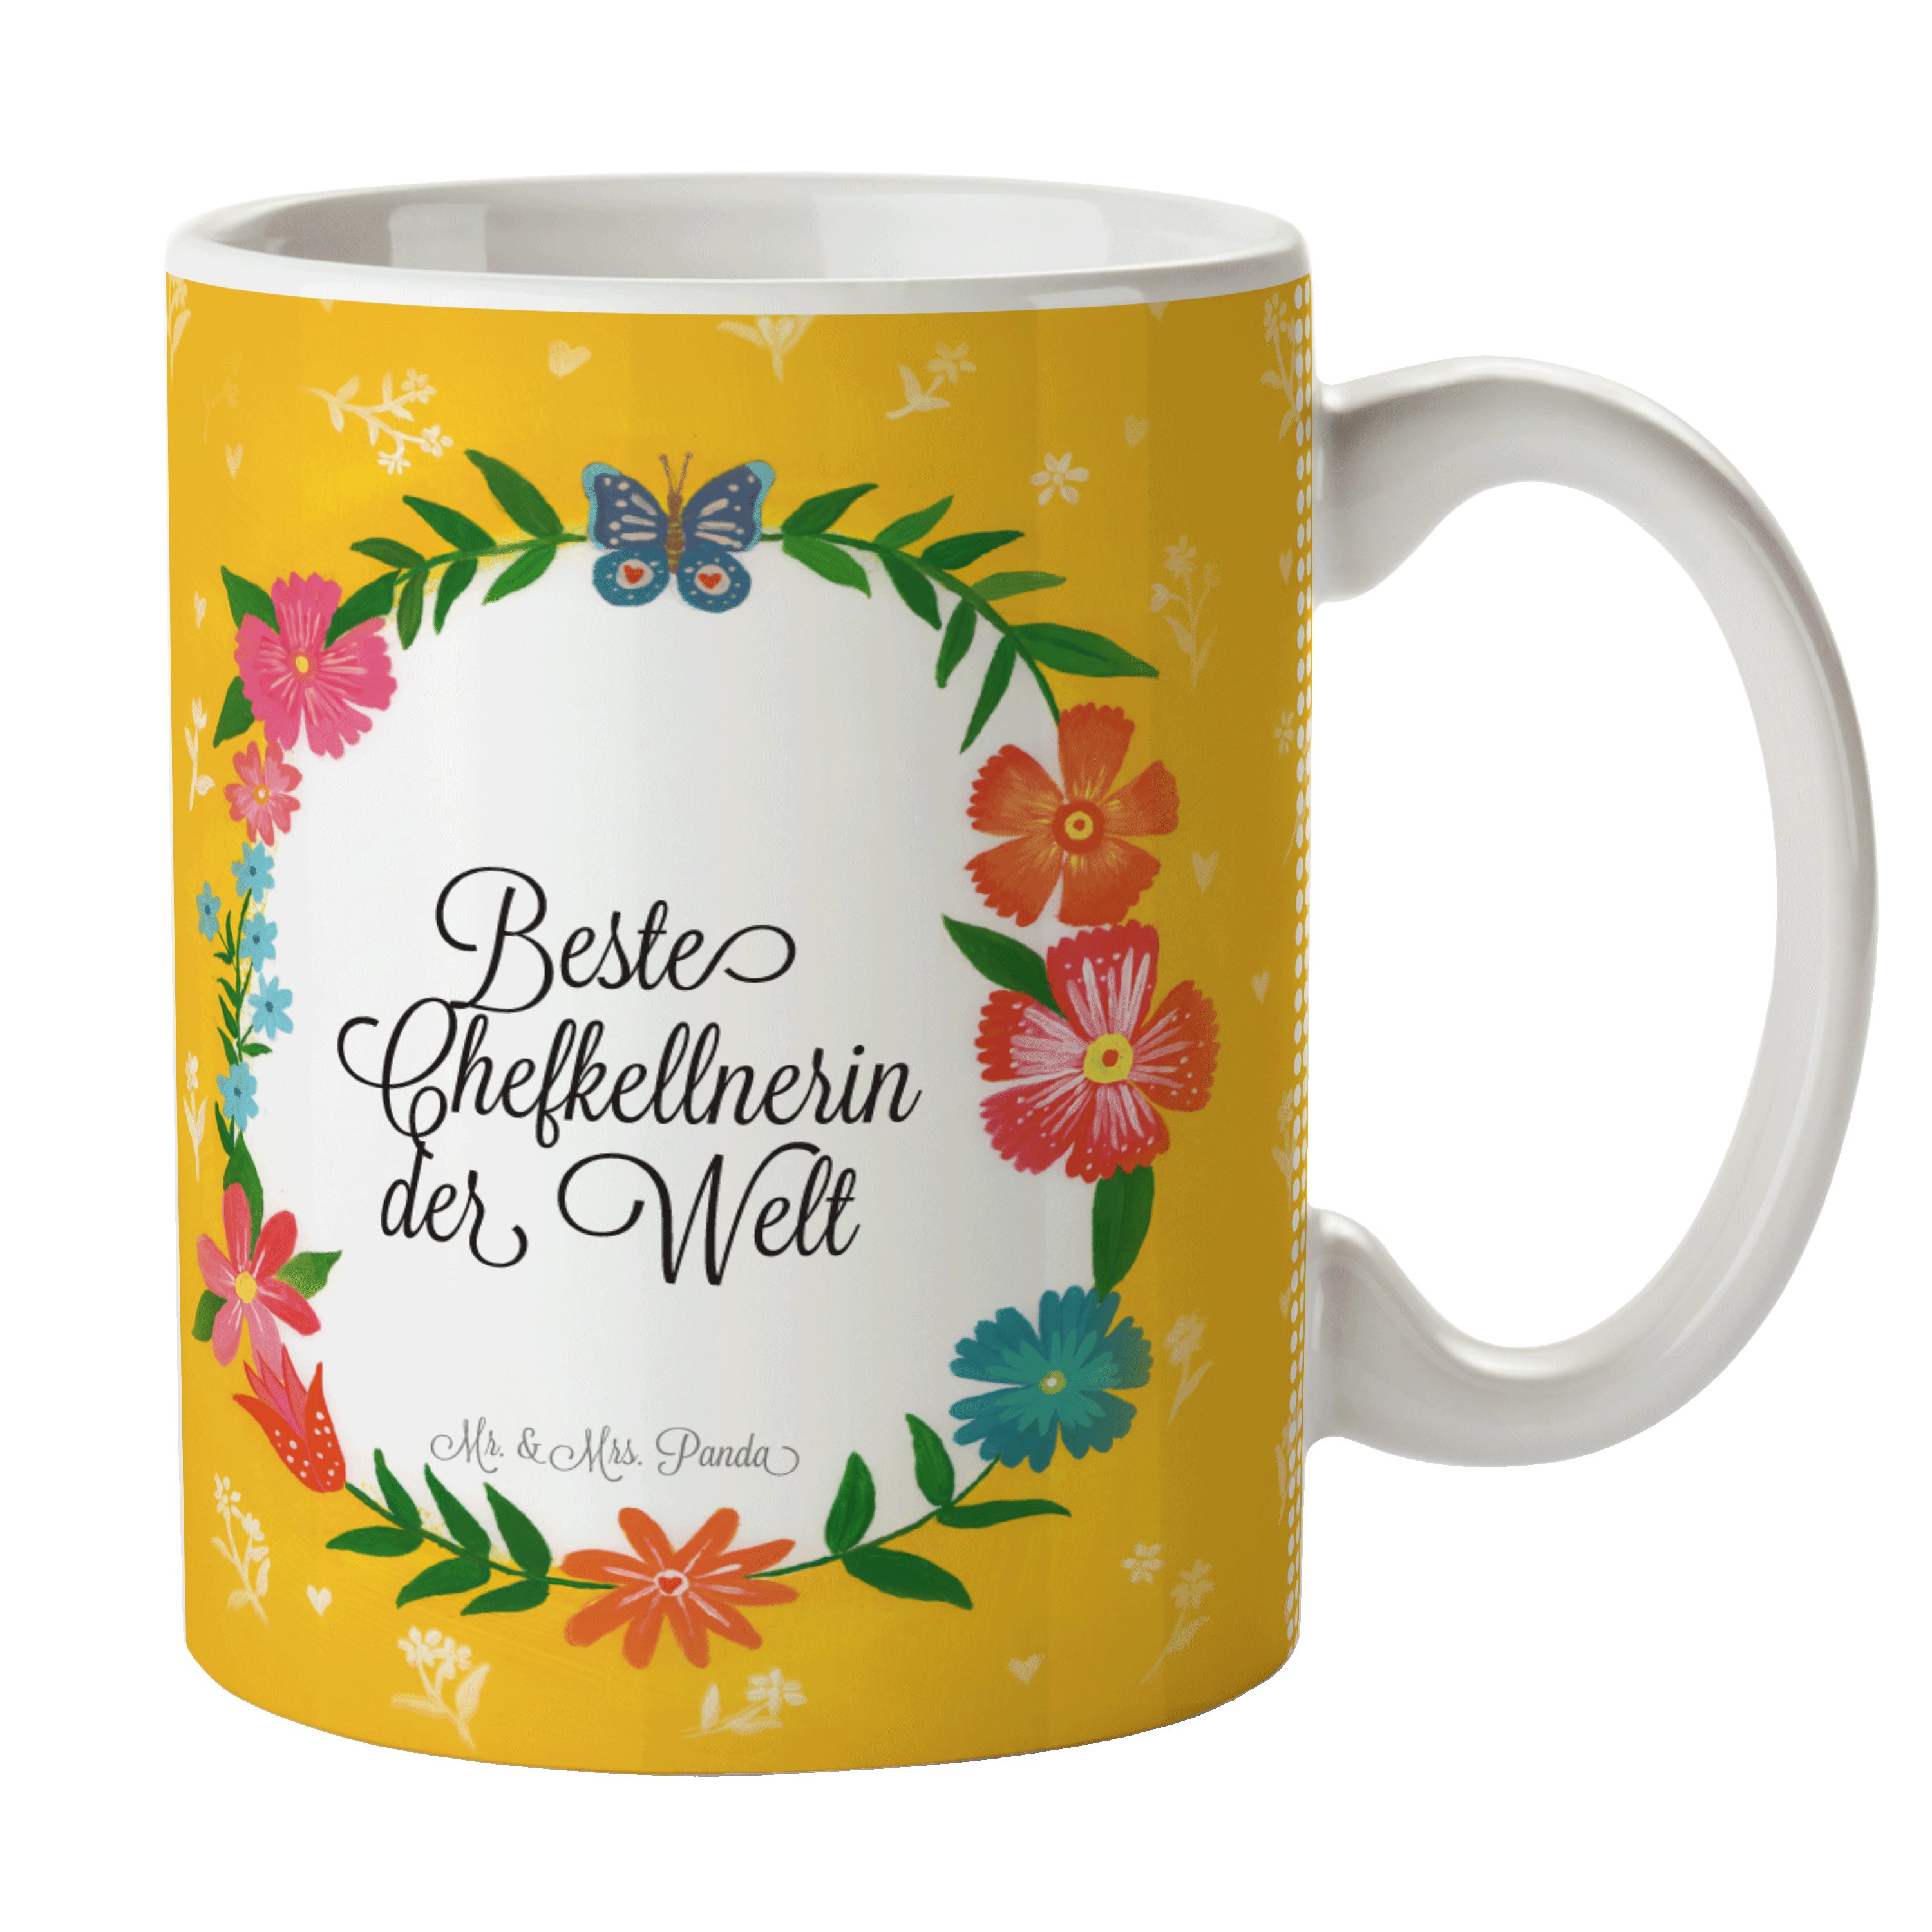 Mr. & Mrs. Panda Rente, Kaffee, Beruf, Geschenk, Teetasse, Gratulation, - Keramik Chefkellnerin Tasse